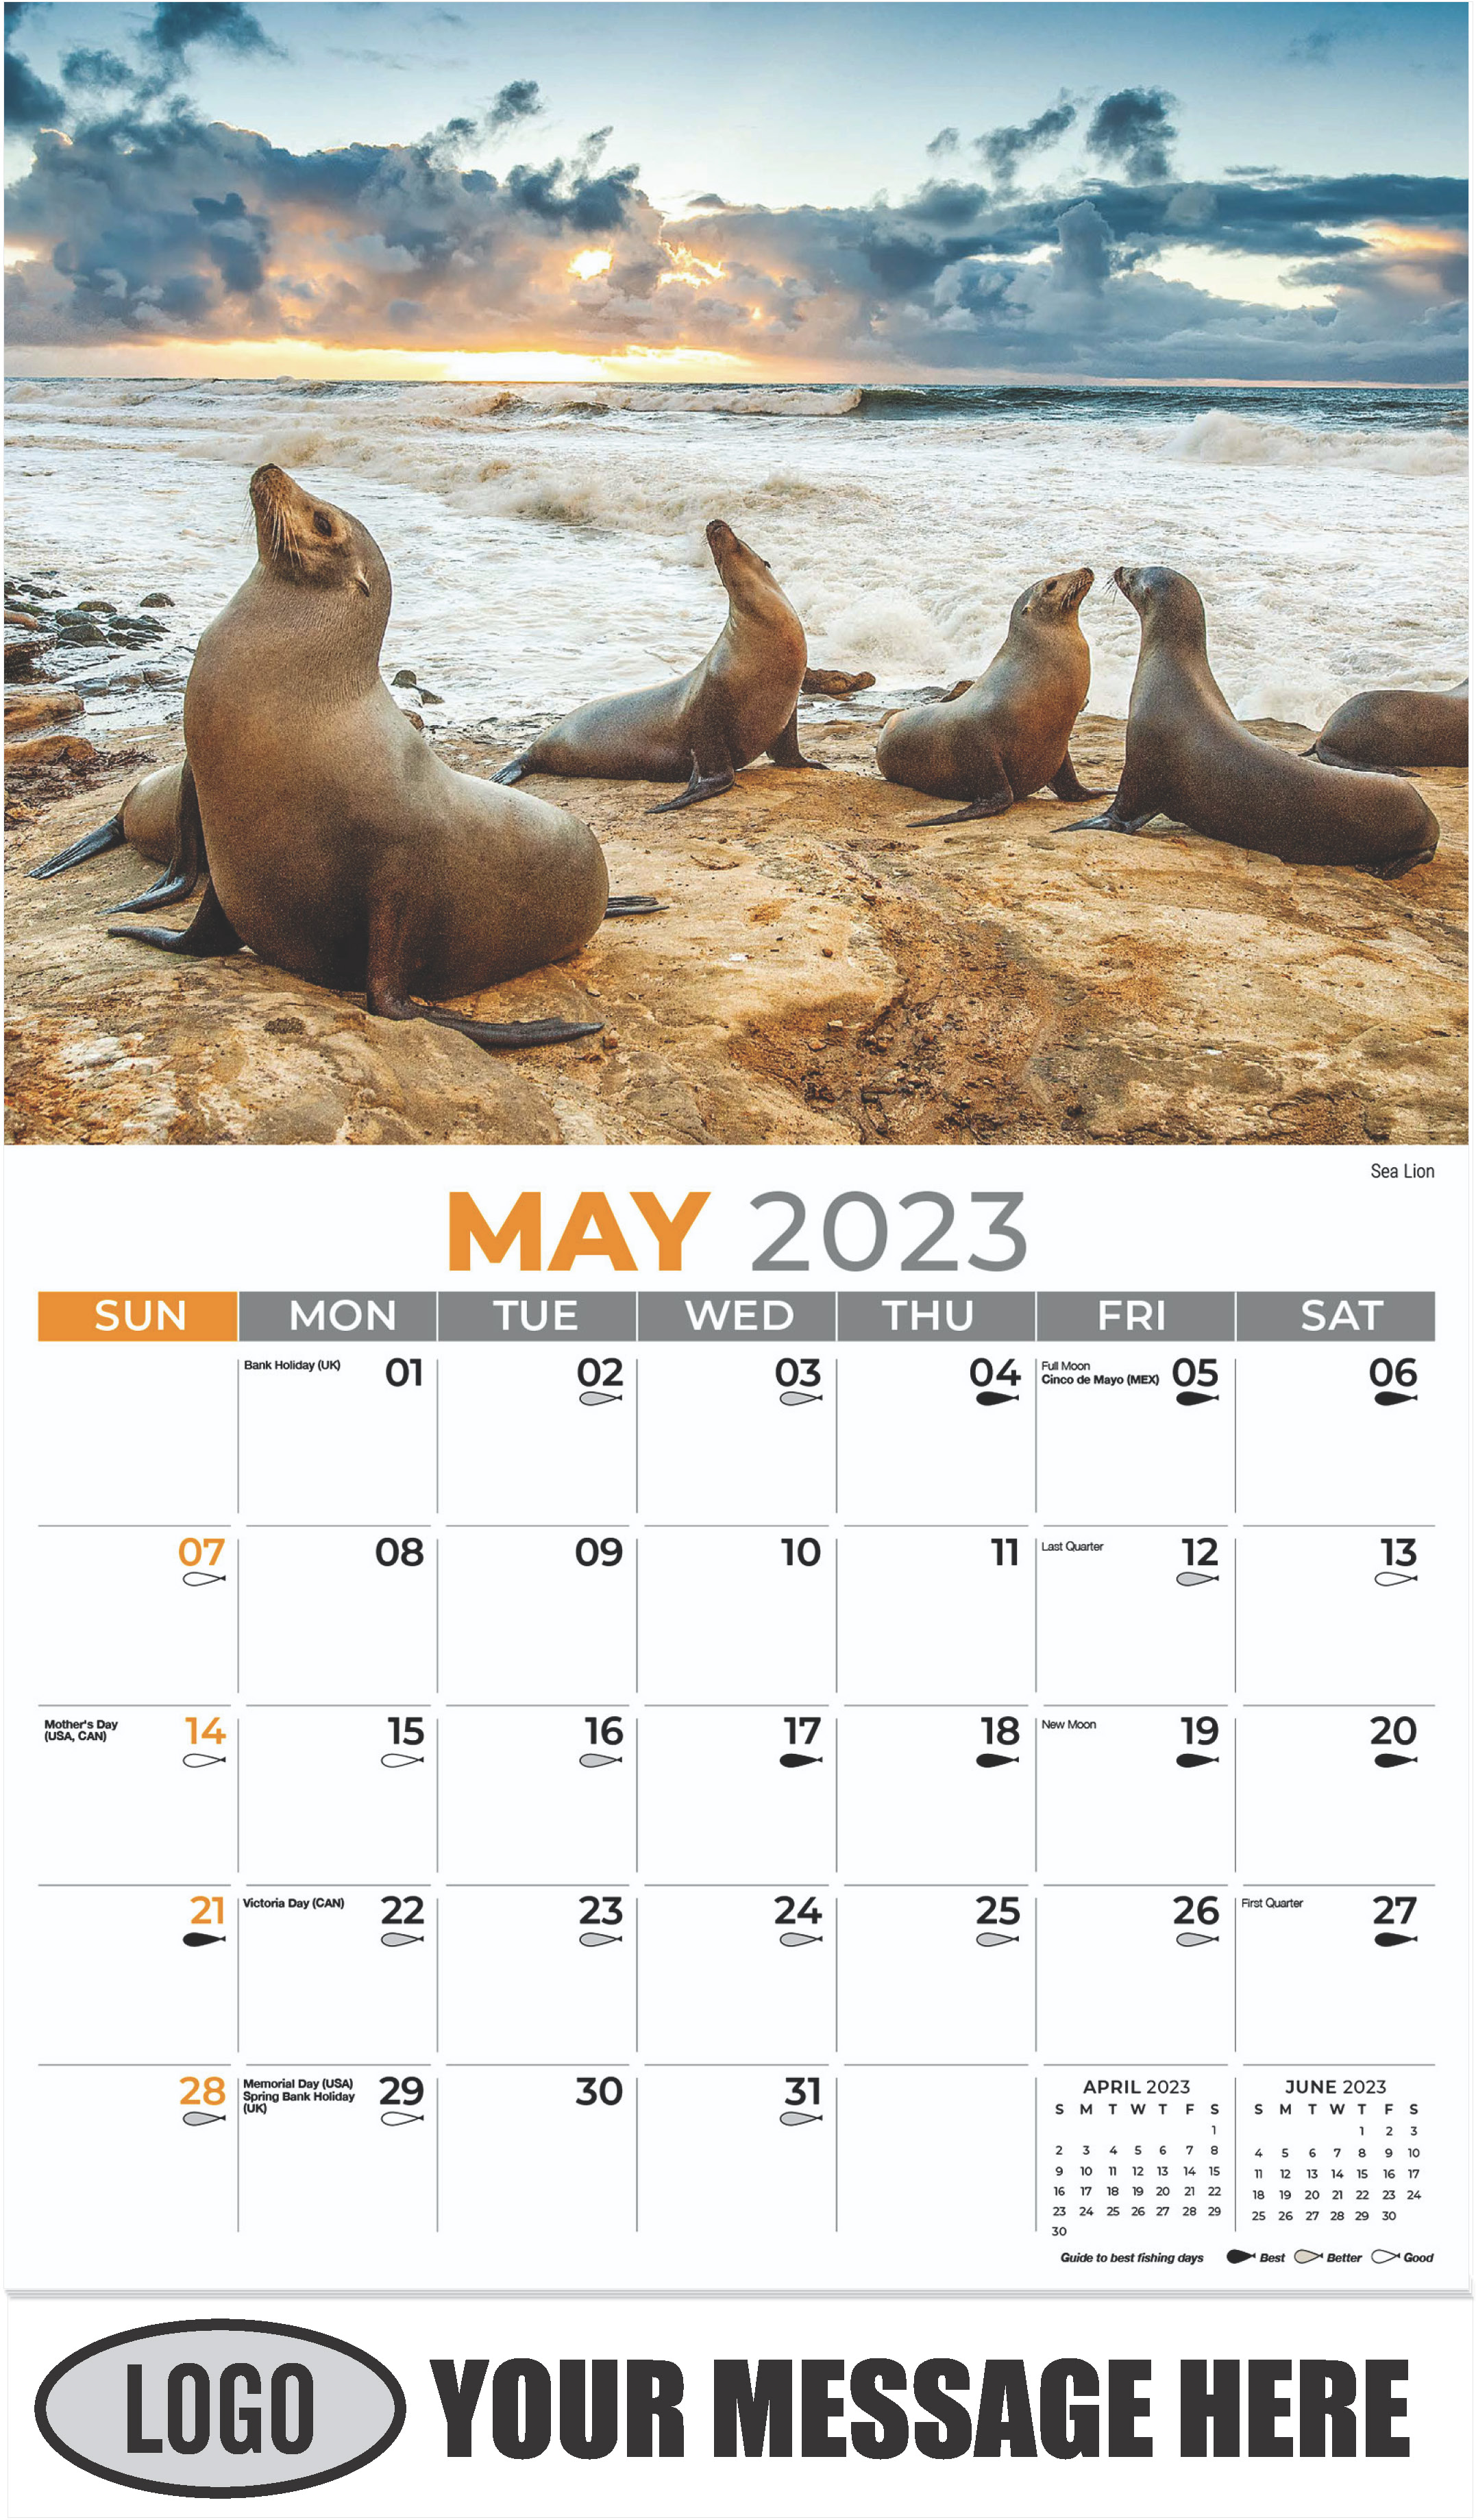 Sea Lion - May - North American Wildlife 2023 Promotional Calendar